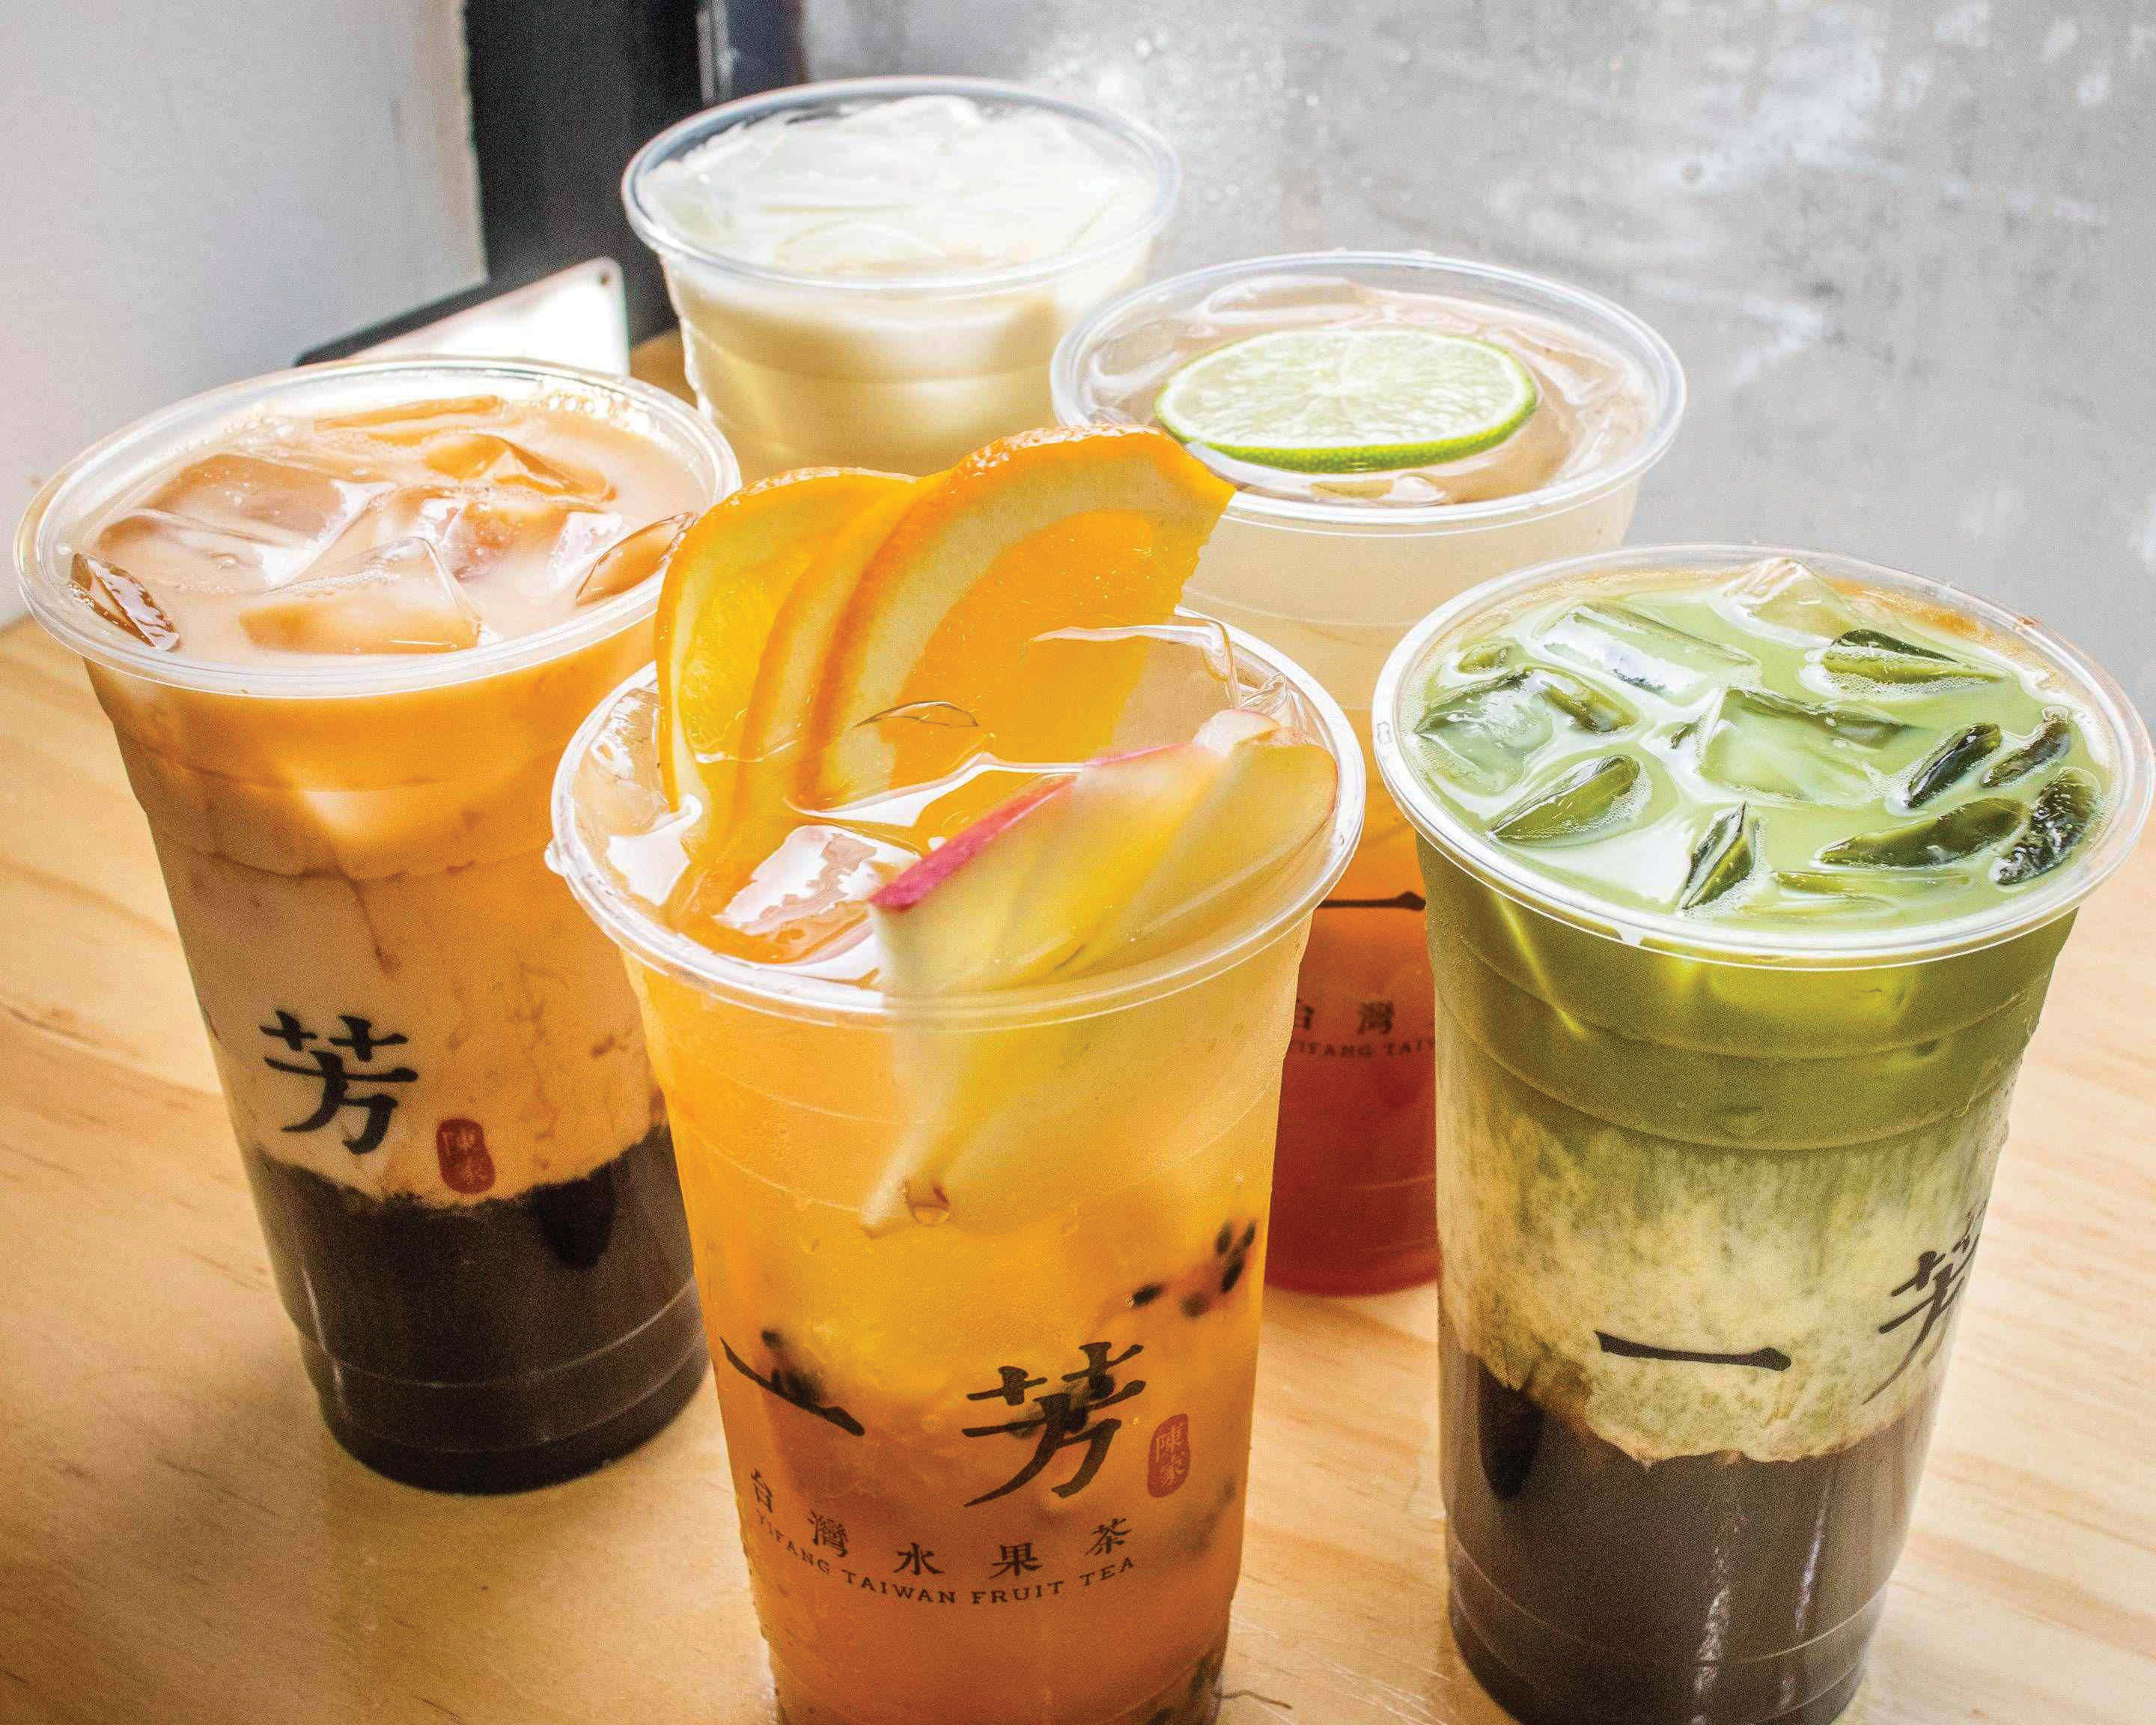 "Five cups of Taiwanese Fruit Tea"